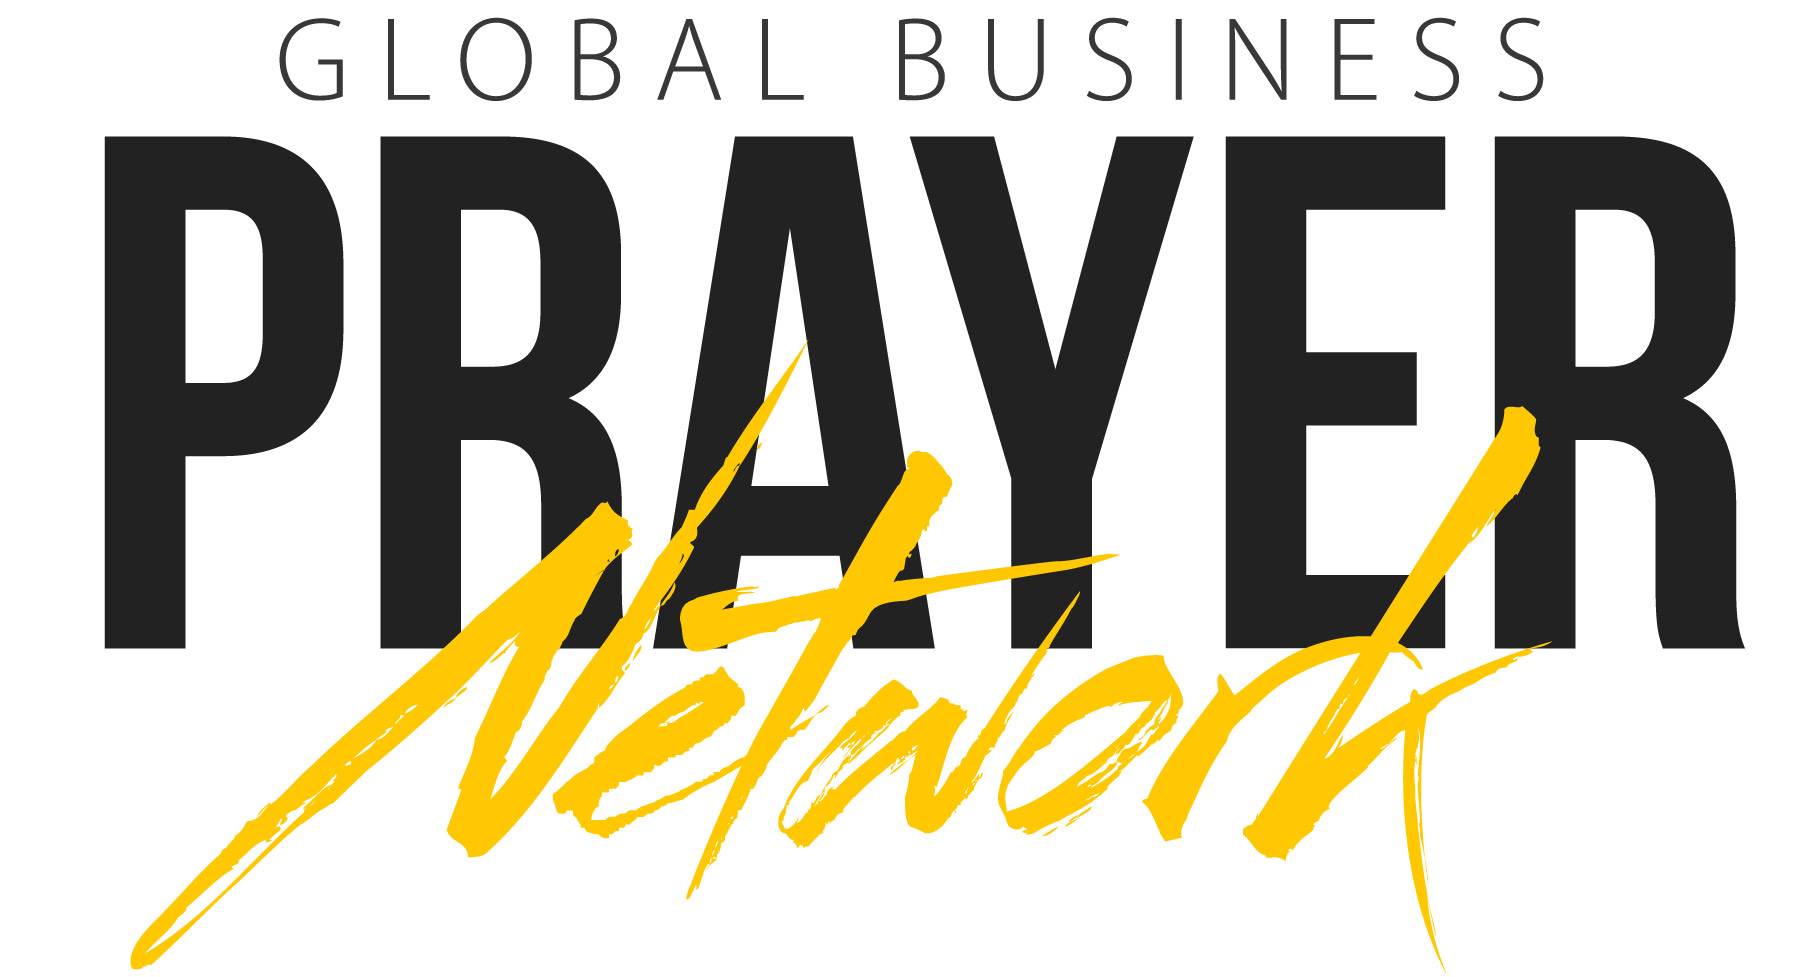 Global Business Prayer Network